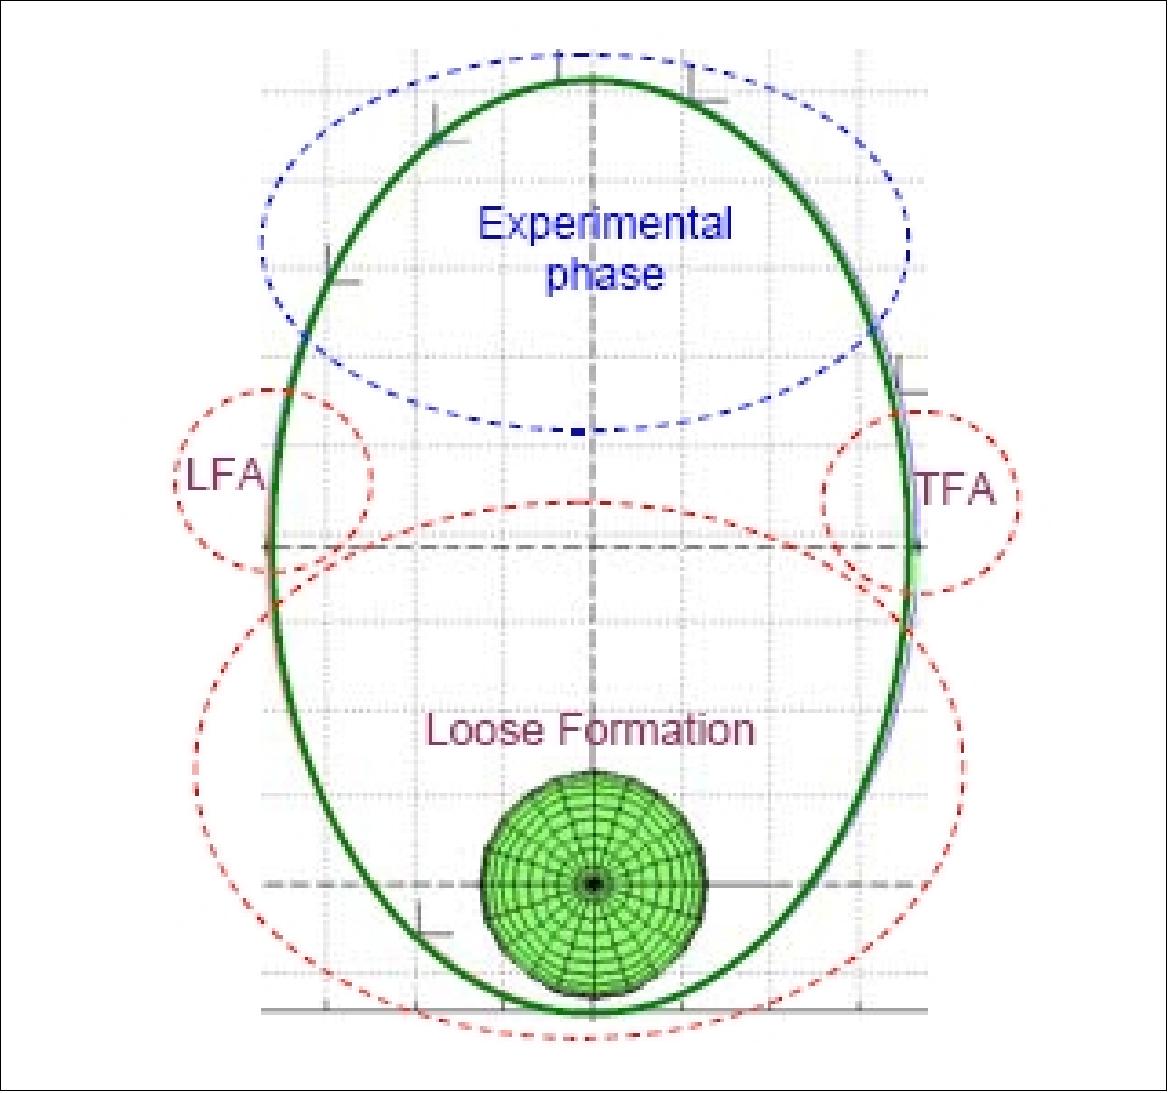 Figure 33: Segmentation of the orbit into experimental and non-experimental phases (image credit: TAS, Deimos)